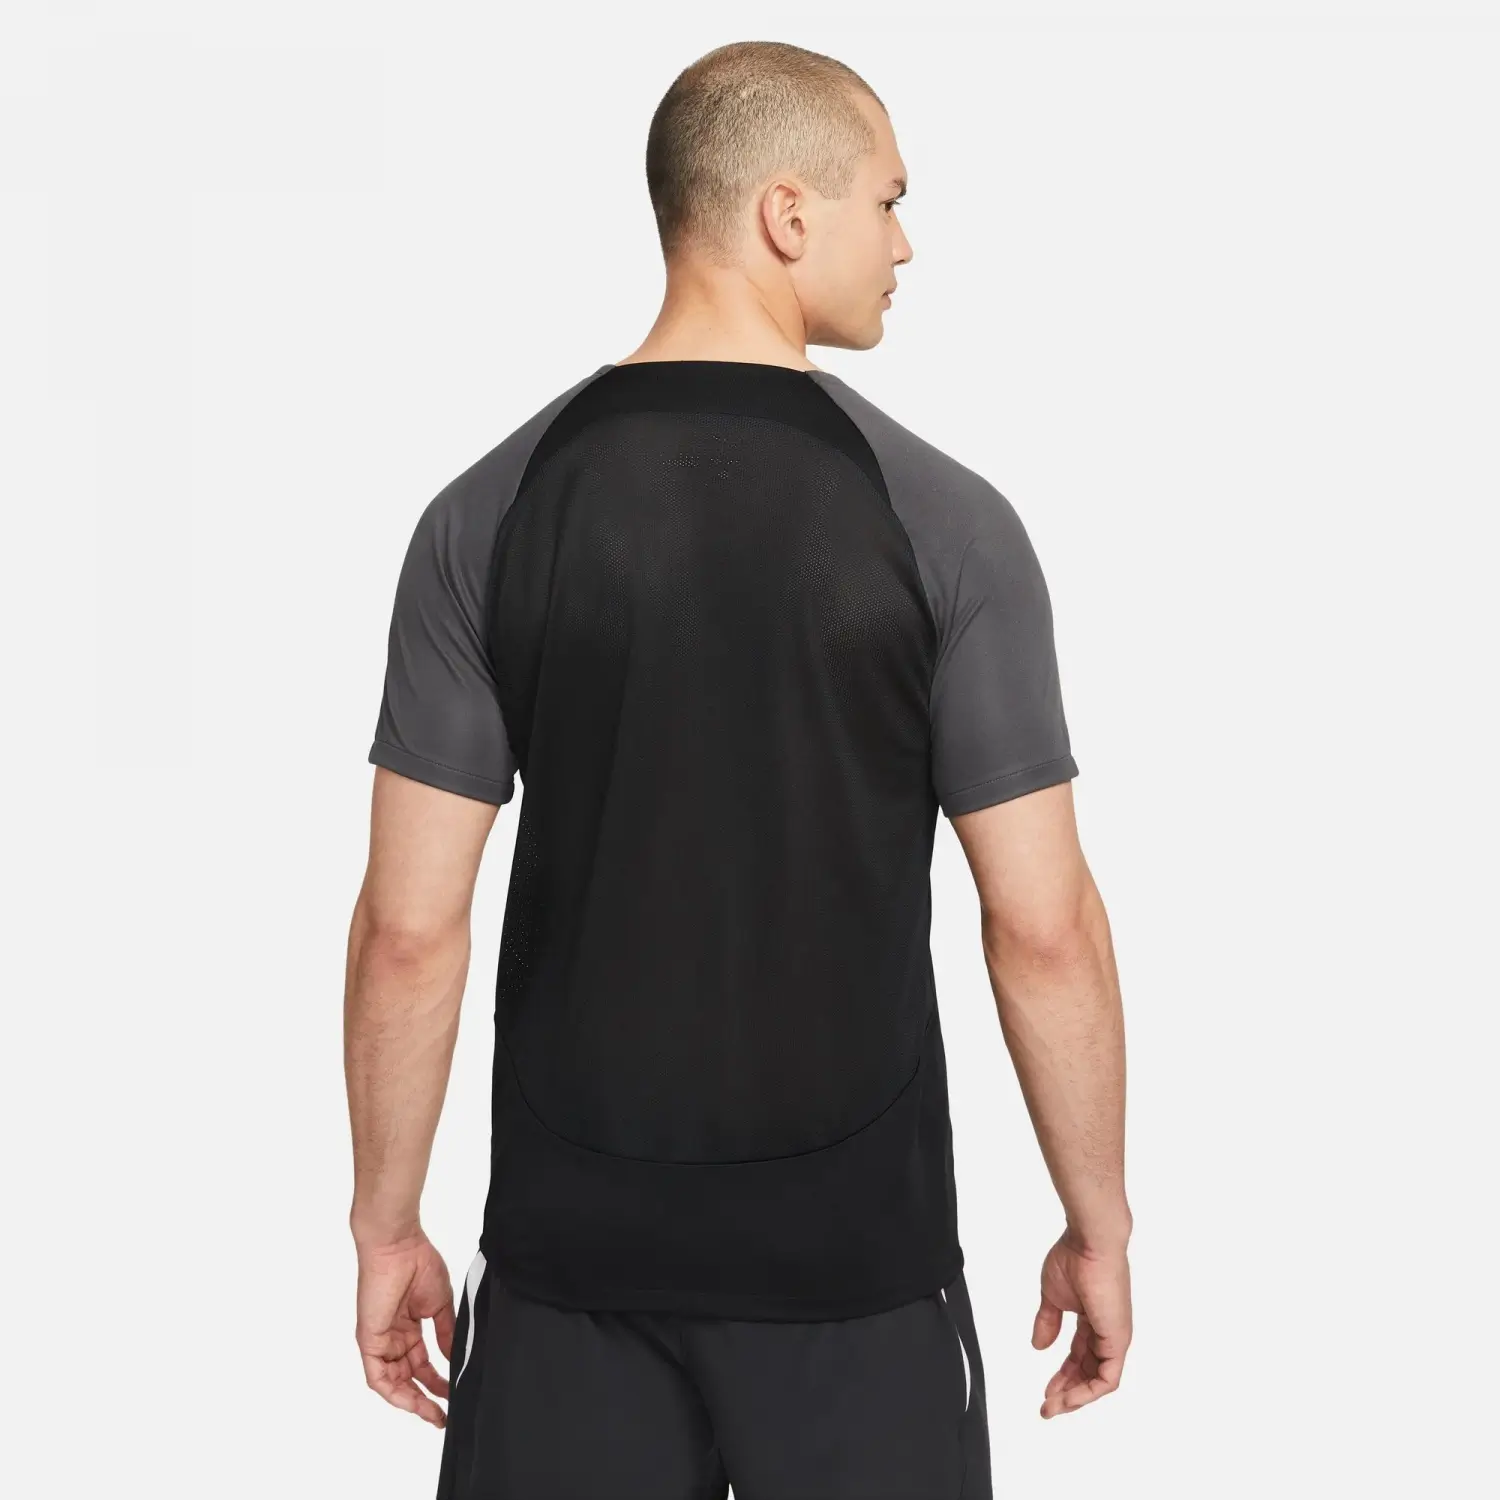 Nike Dri-FIT Academy Pro Siyah Erkek Tişört DH9225-011